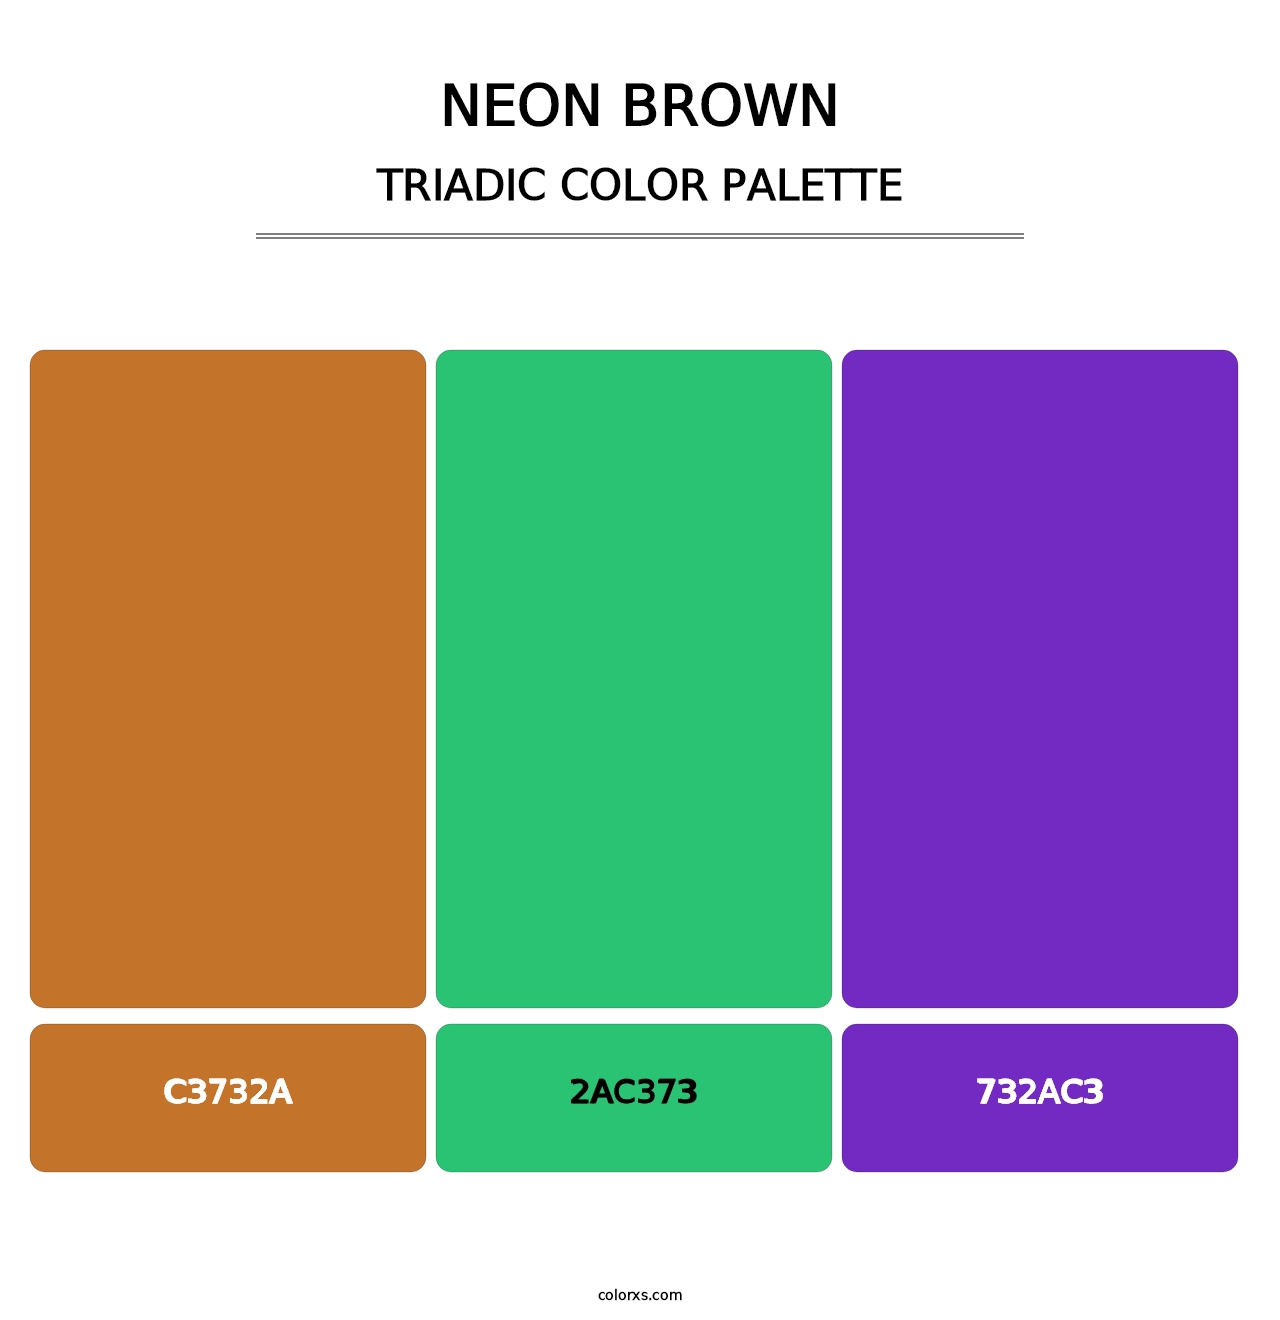 Neon Brown - Triadic Color Palette